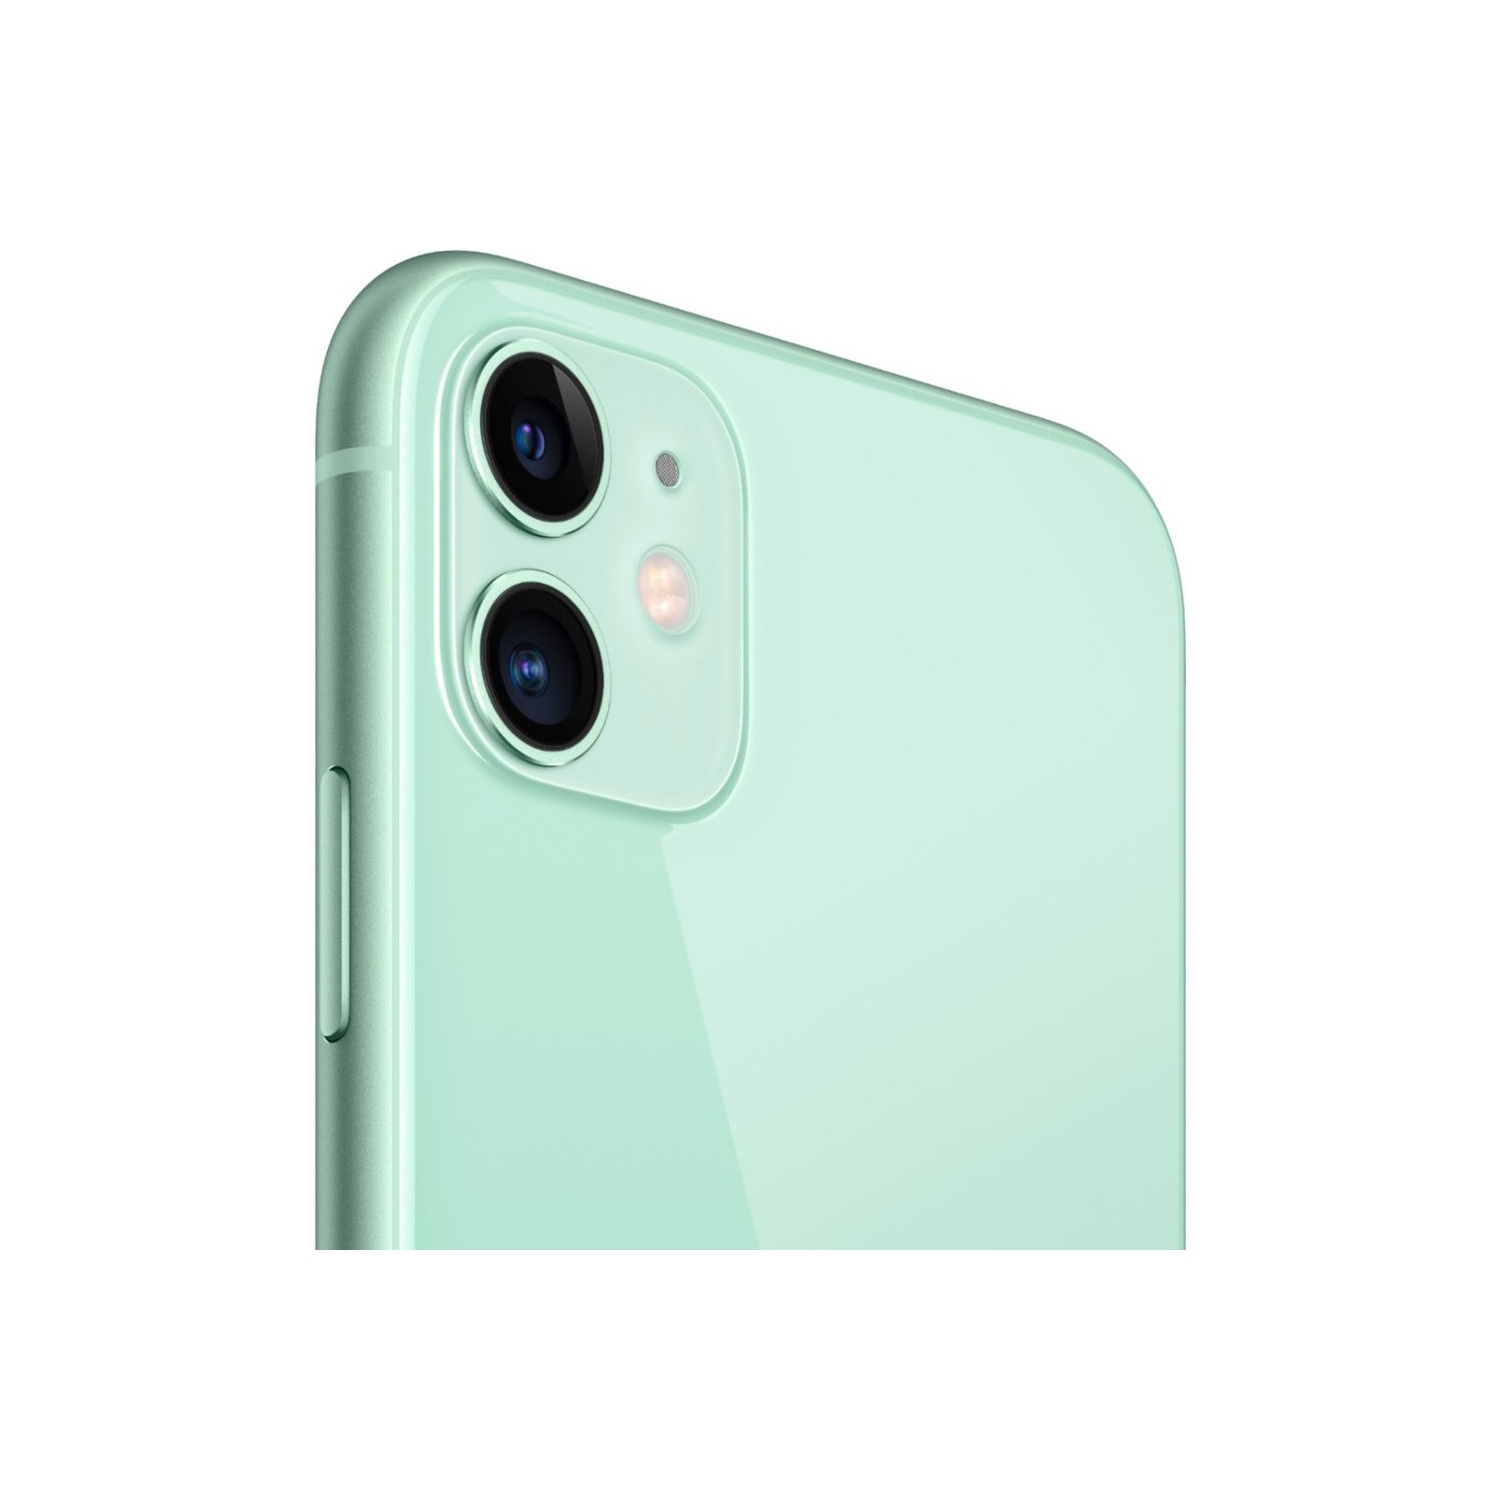 Apple iPhone 11 64GB Smartphone - Green - Unlocked - Open Box 